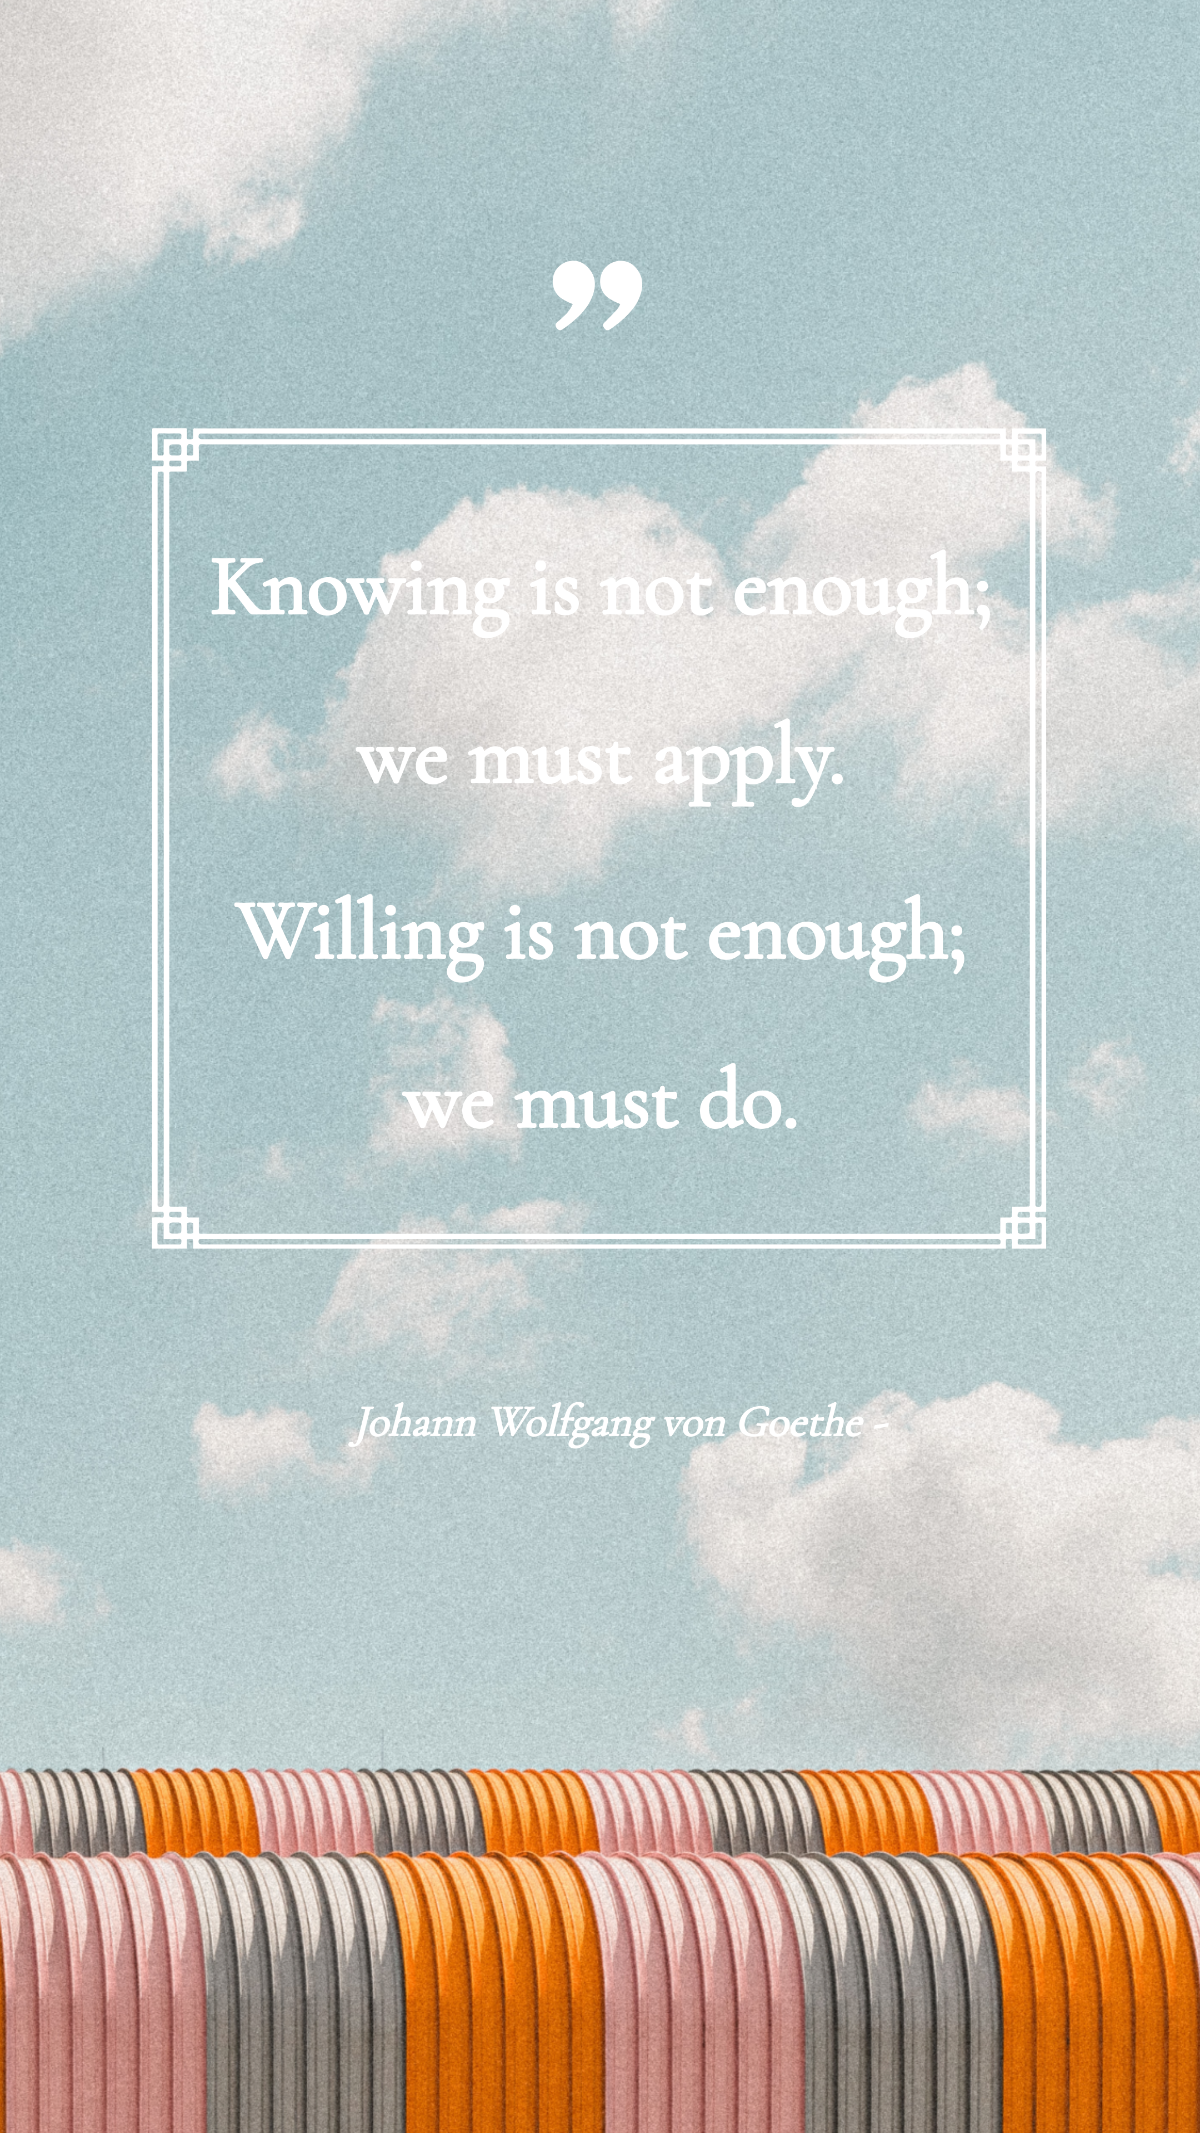 Johann Wolfgang von Goethe - Knowing is not enough; we must apply. Willing is not enough; we must do.